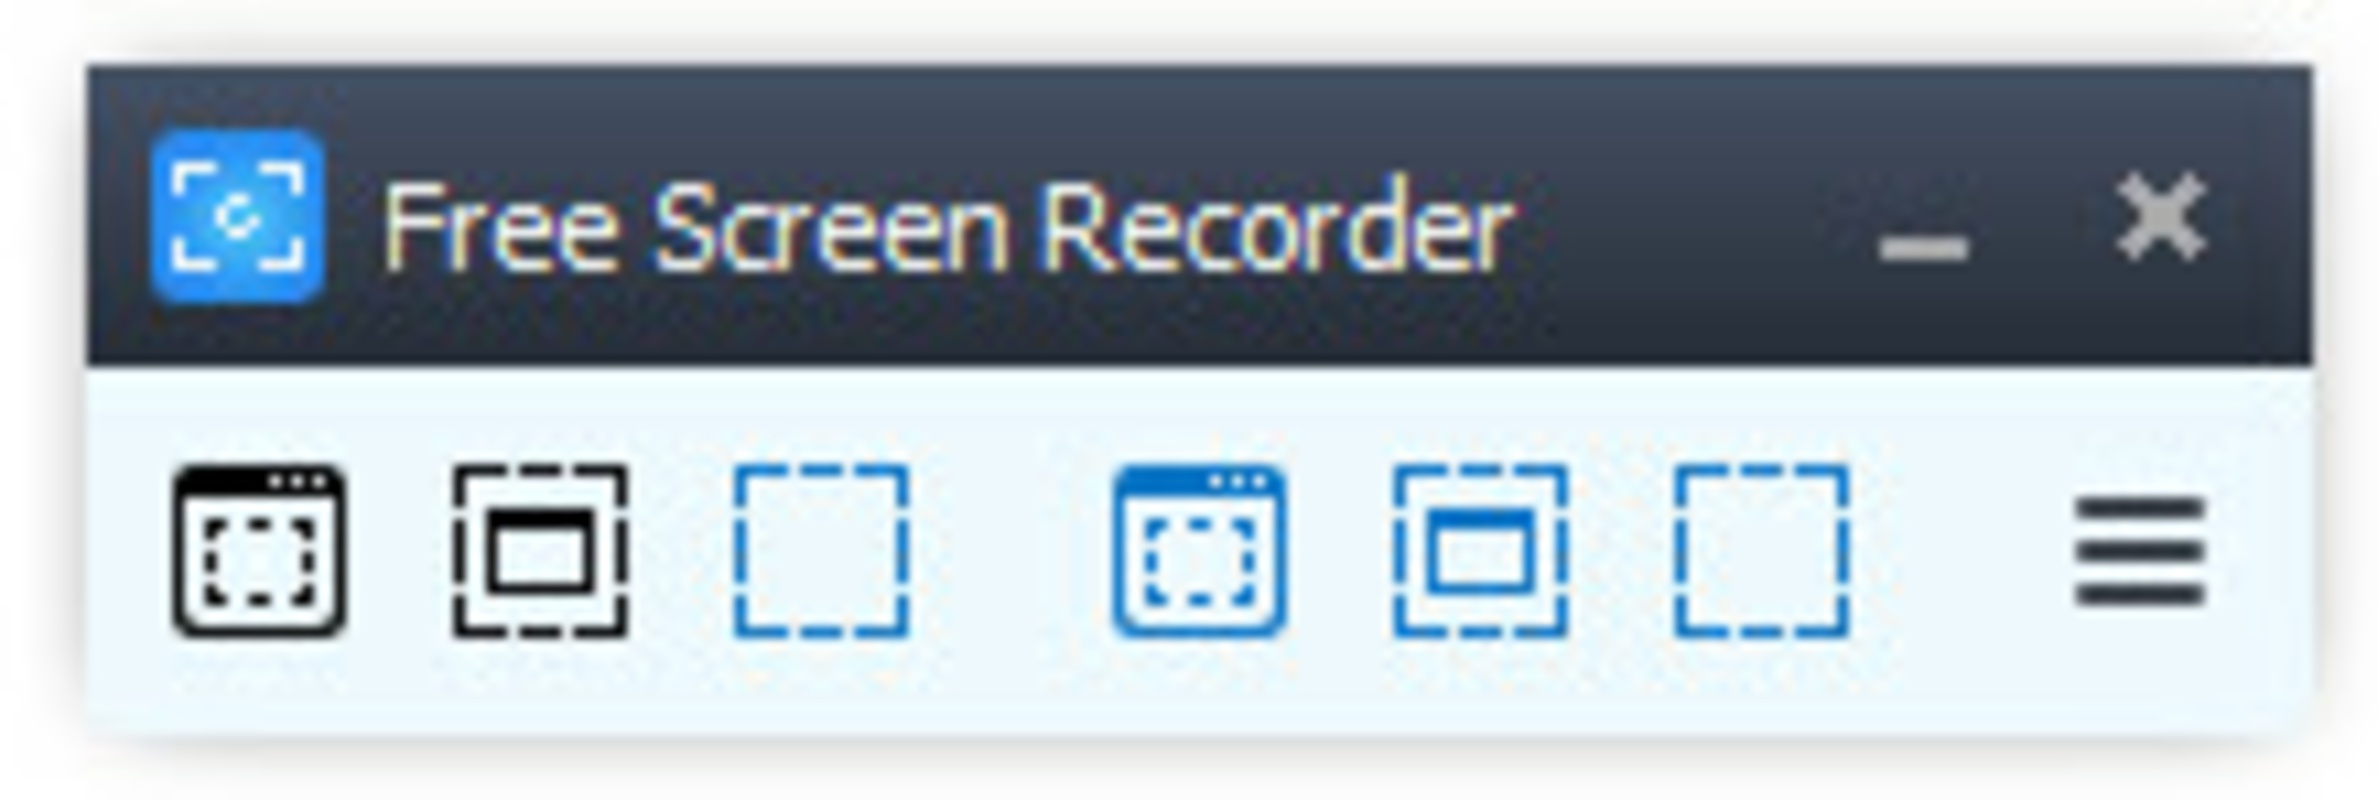 Free Screen Recorder 3.1.1.1024 for Windows Screenshot 1